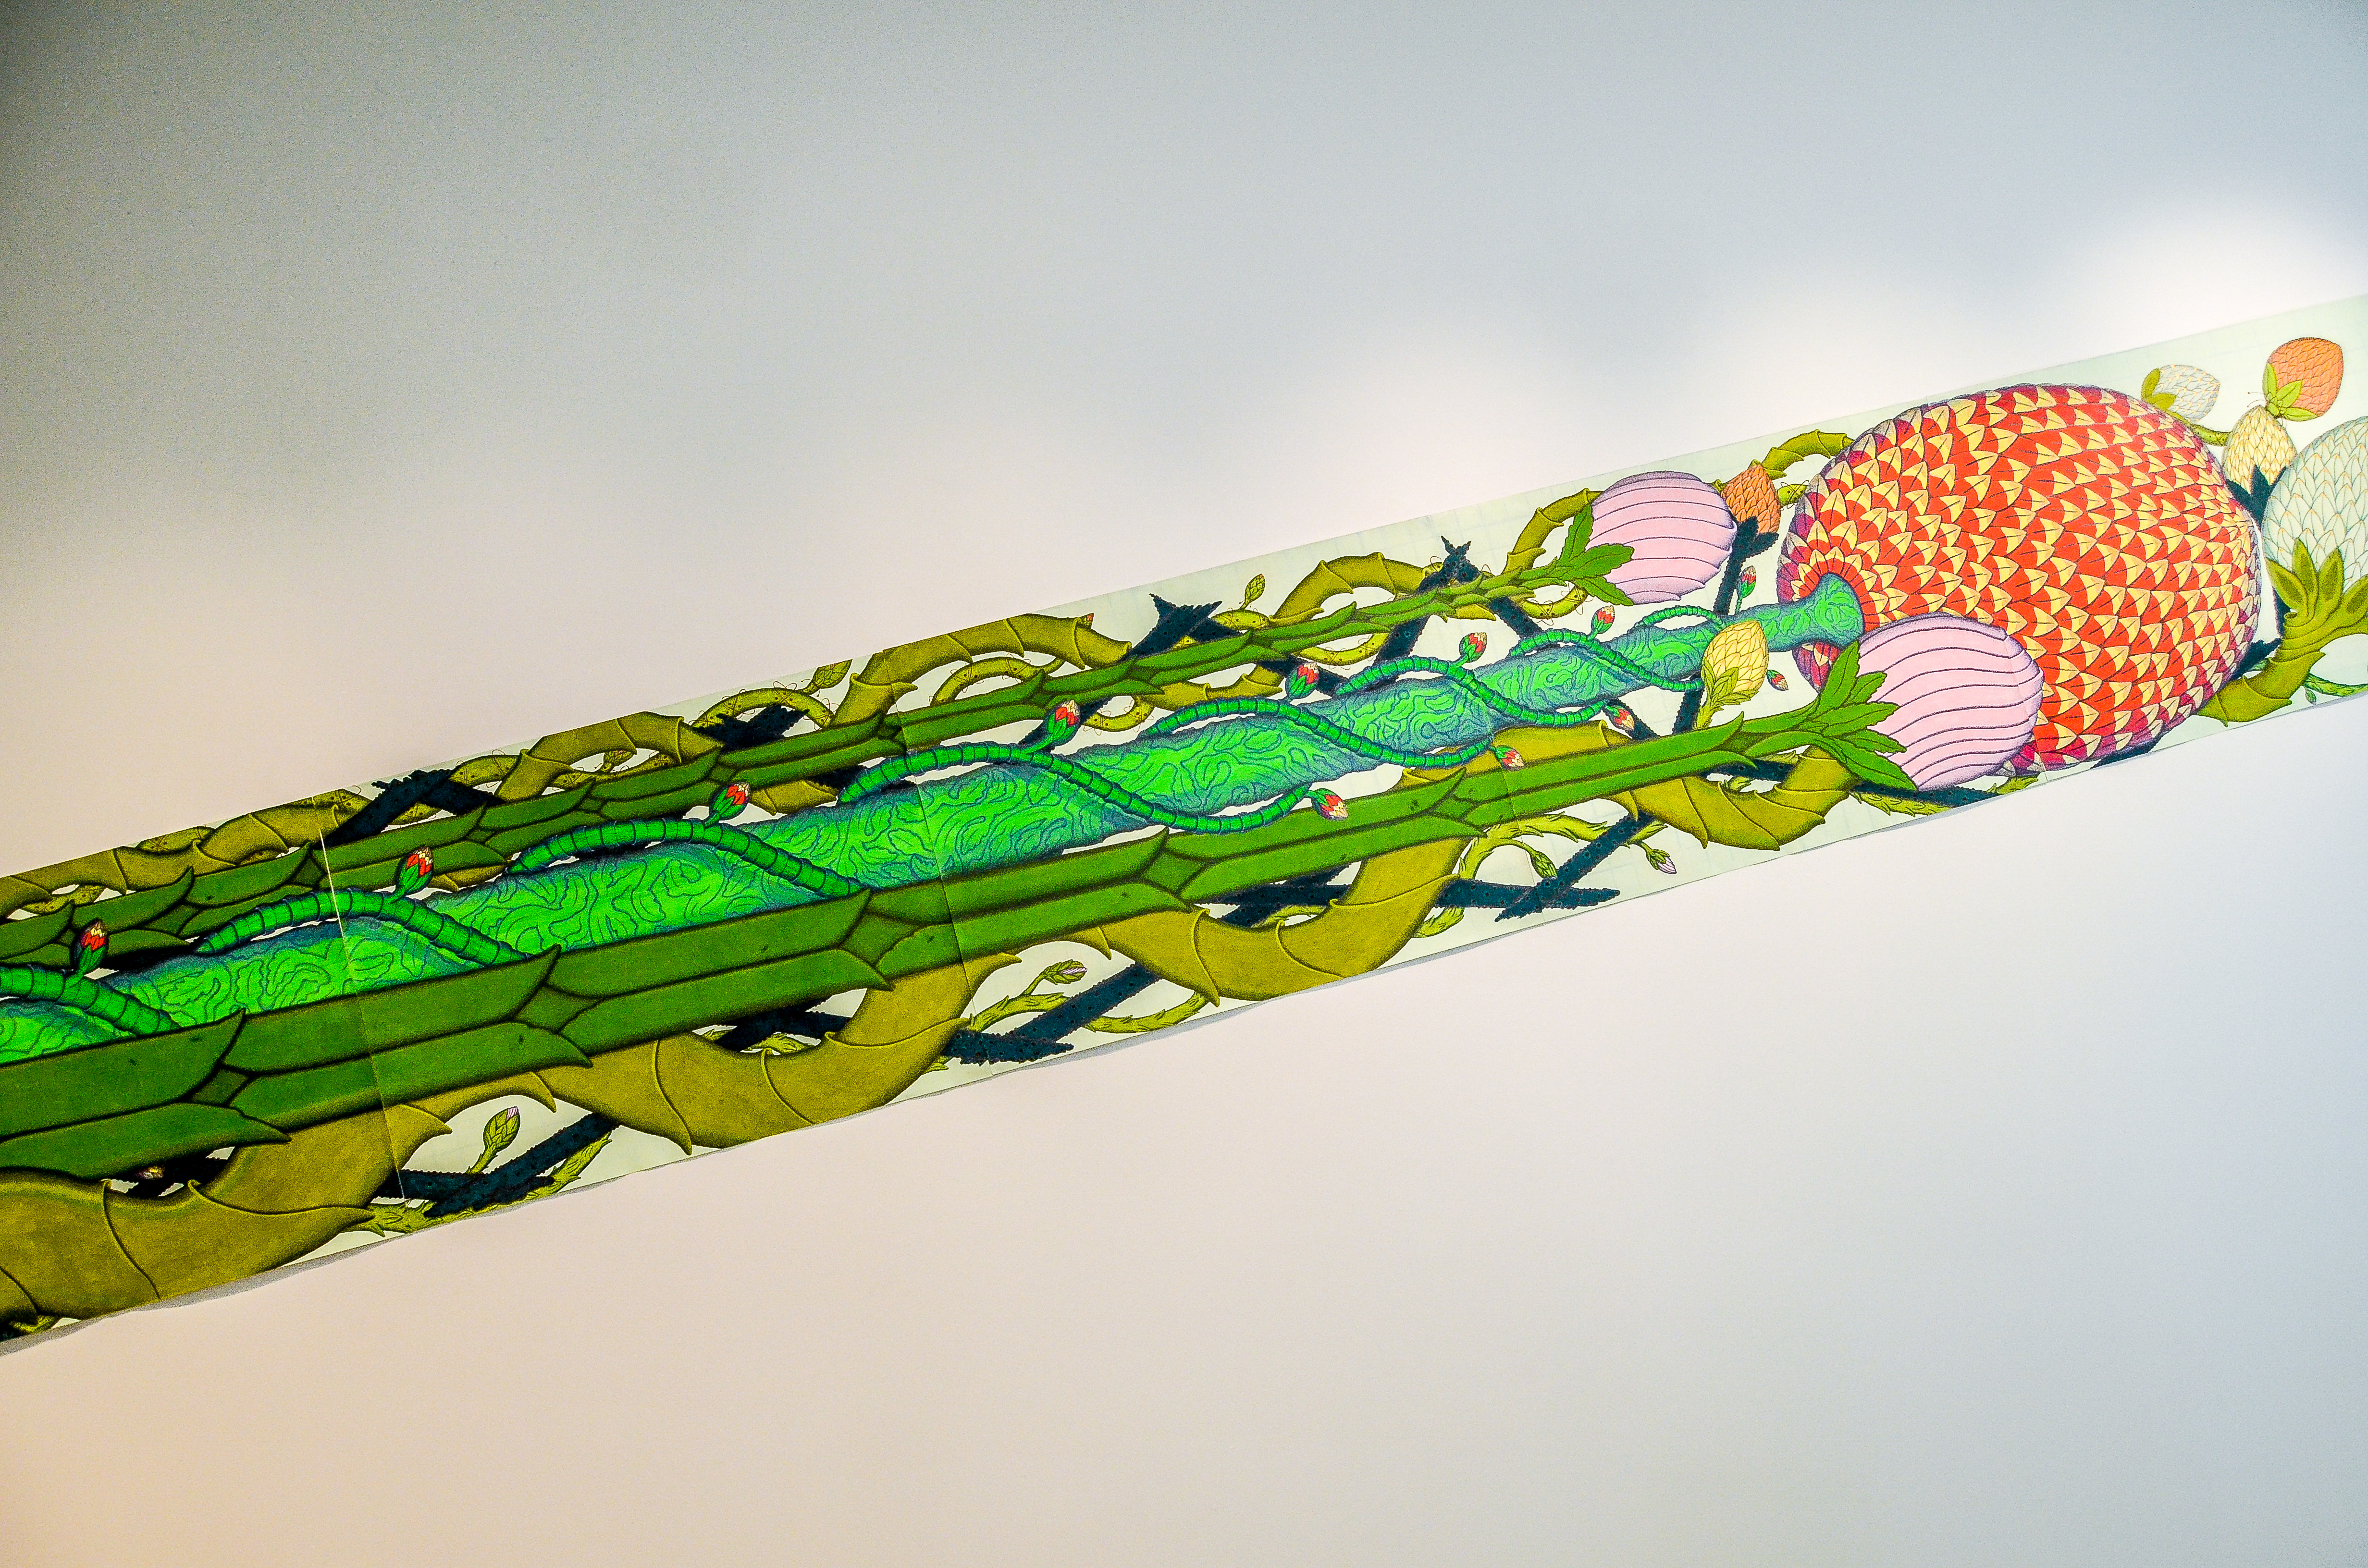 "Mighty Chrysanthemum Tree" by Mel Watkin, at Grand Rapids Art Museum